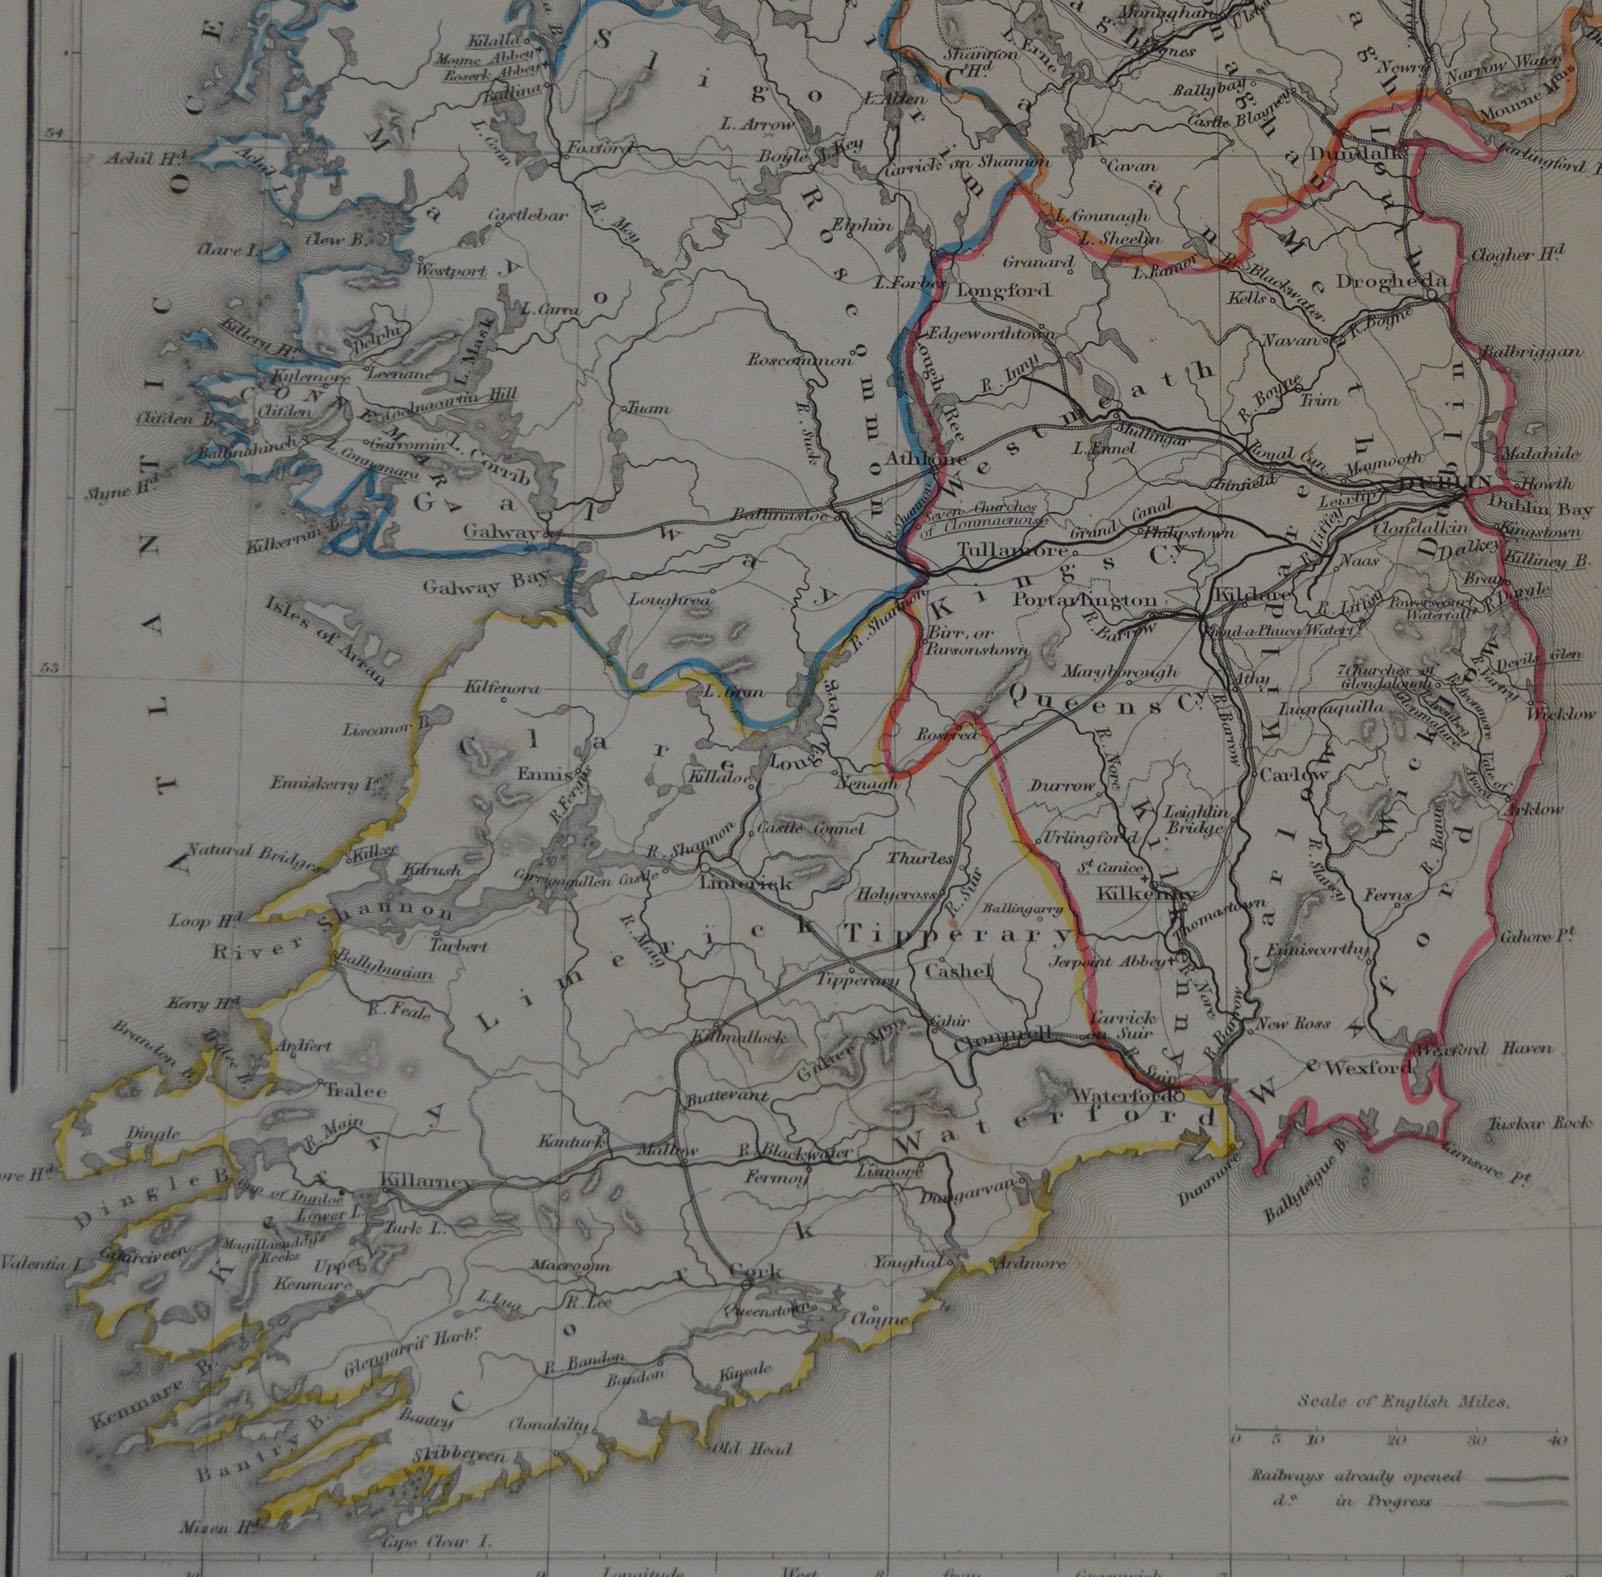 Other Original Antique Map of Ireland by Hughes, circa 1840